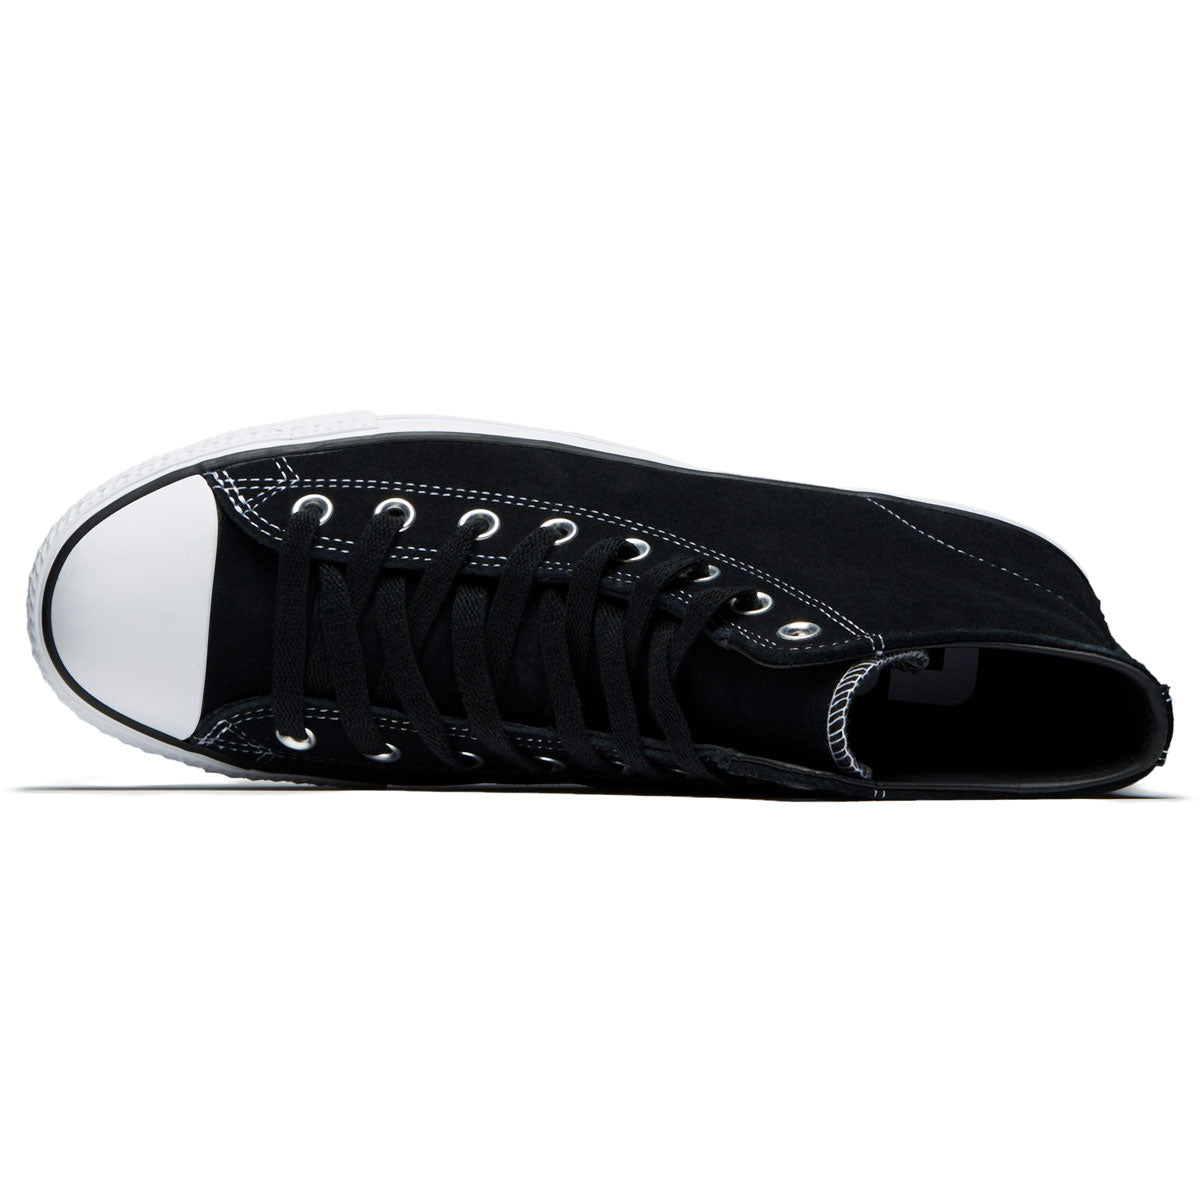 Converse Taylor All Star Pro Suede Hi Shoes - Black/Black/White – CCS